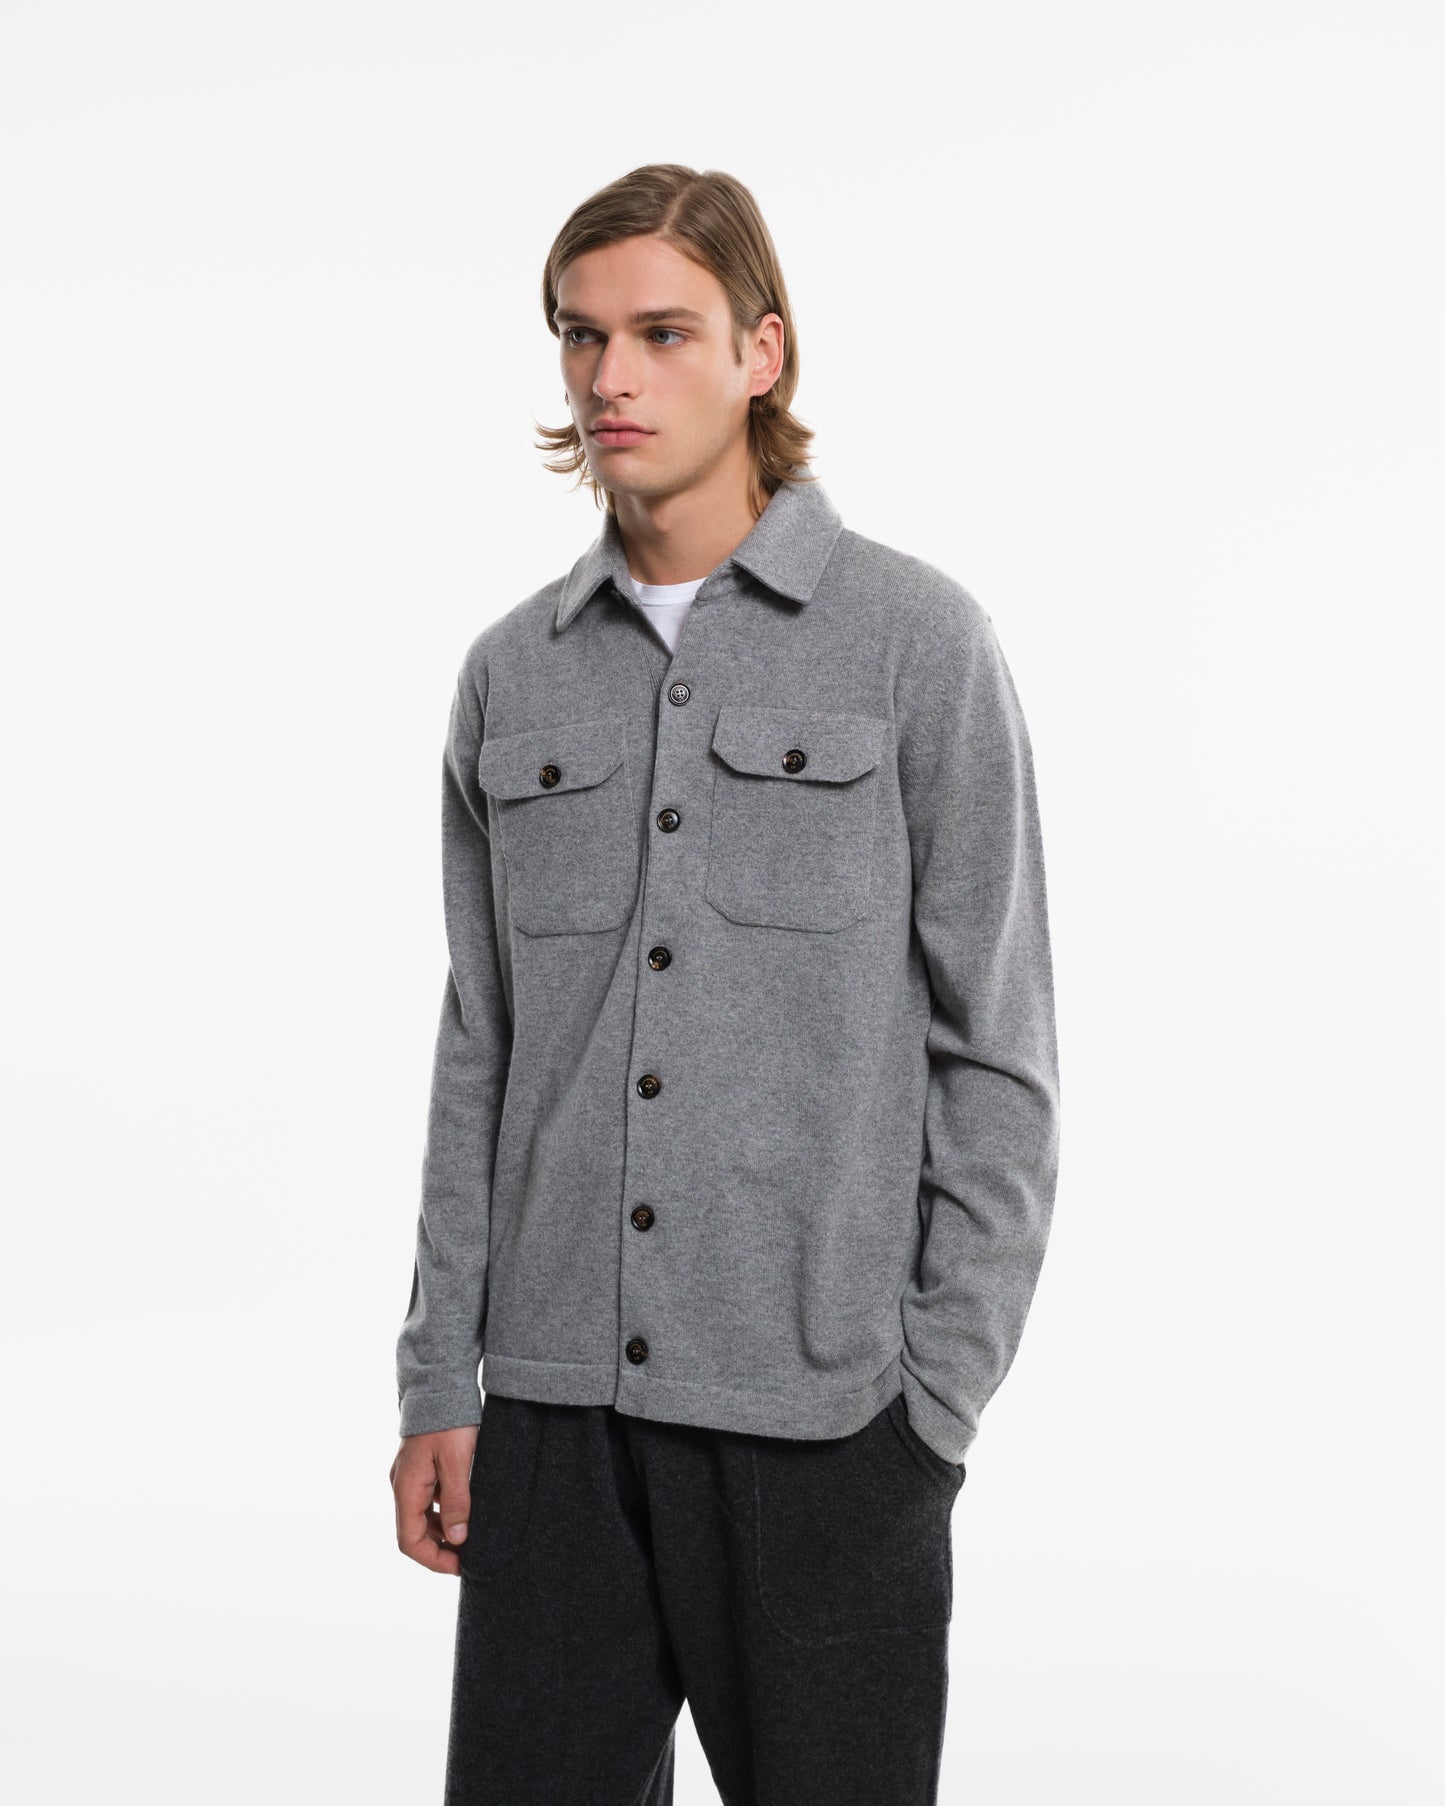 Gray Cashmere shirt jacket